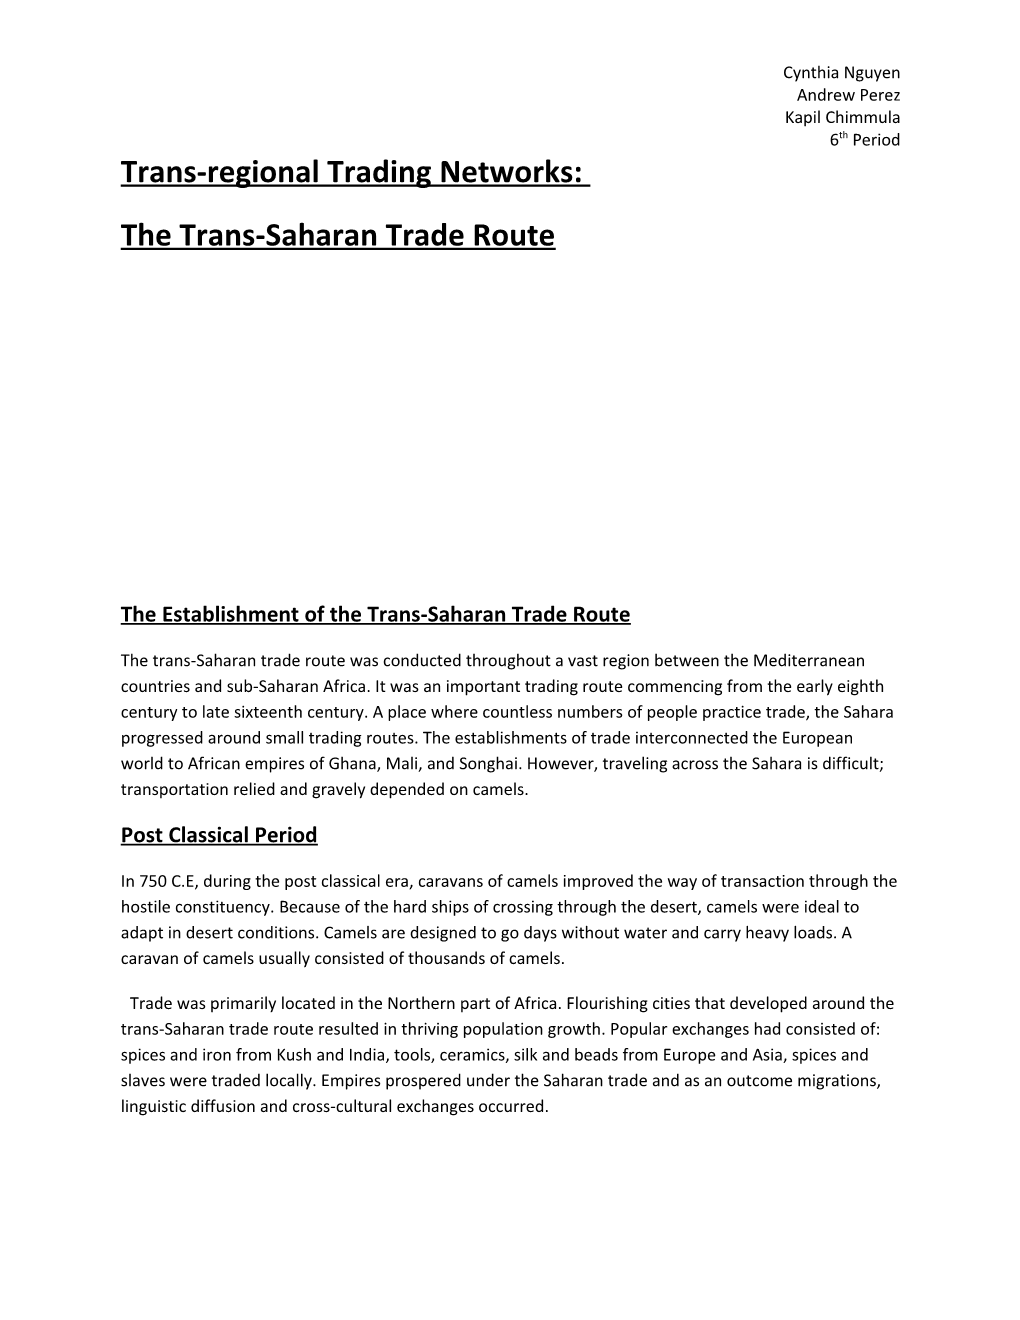 Trans-Regional Trading Networks